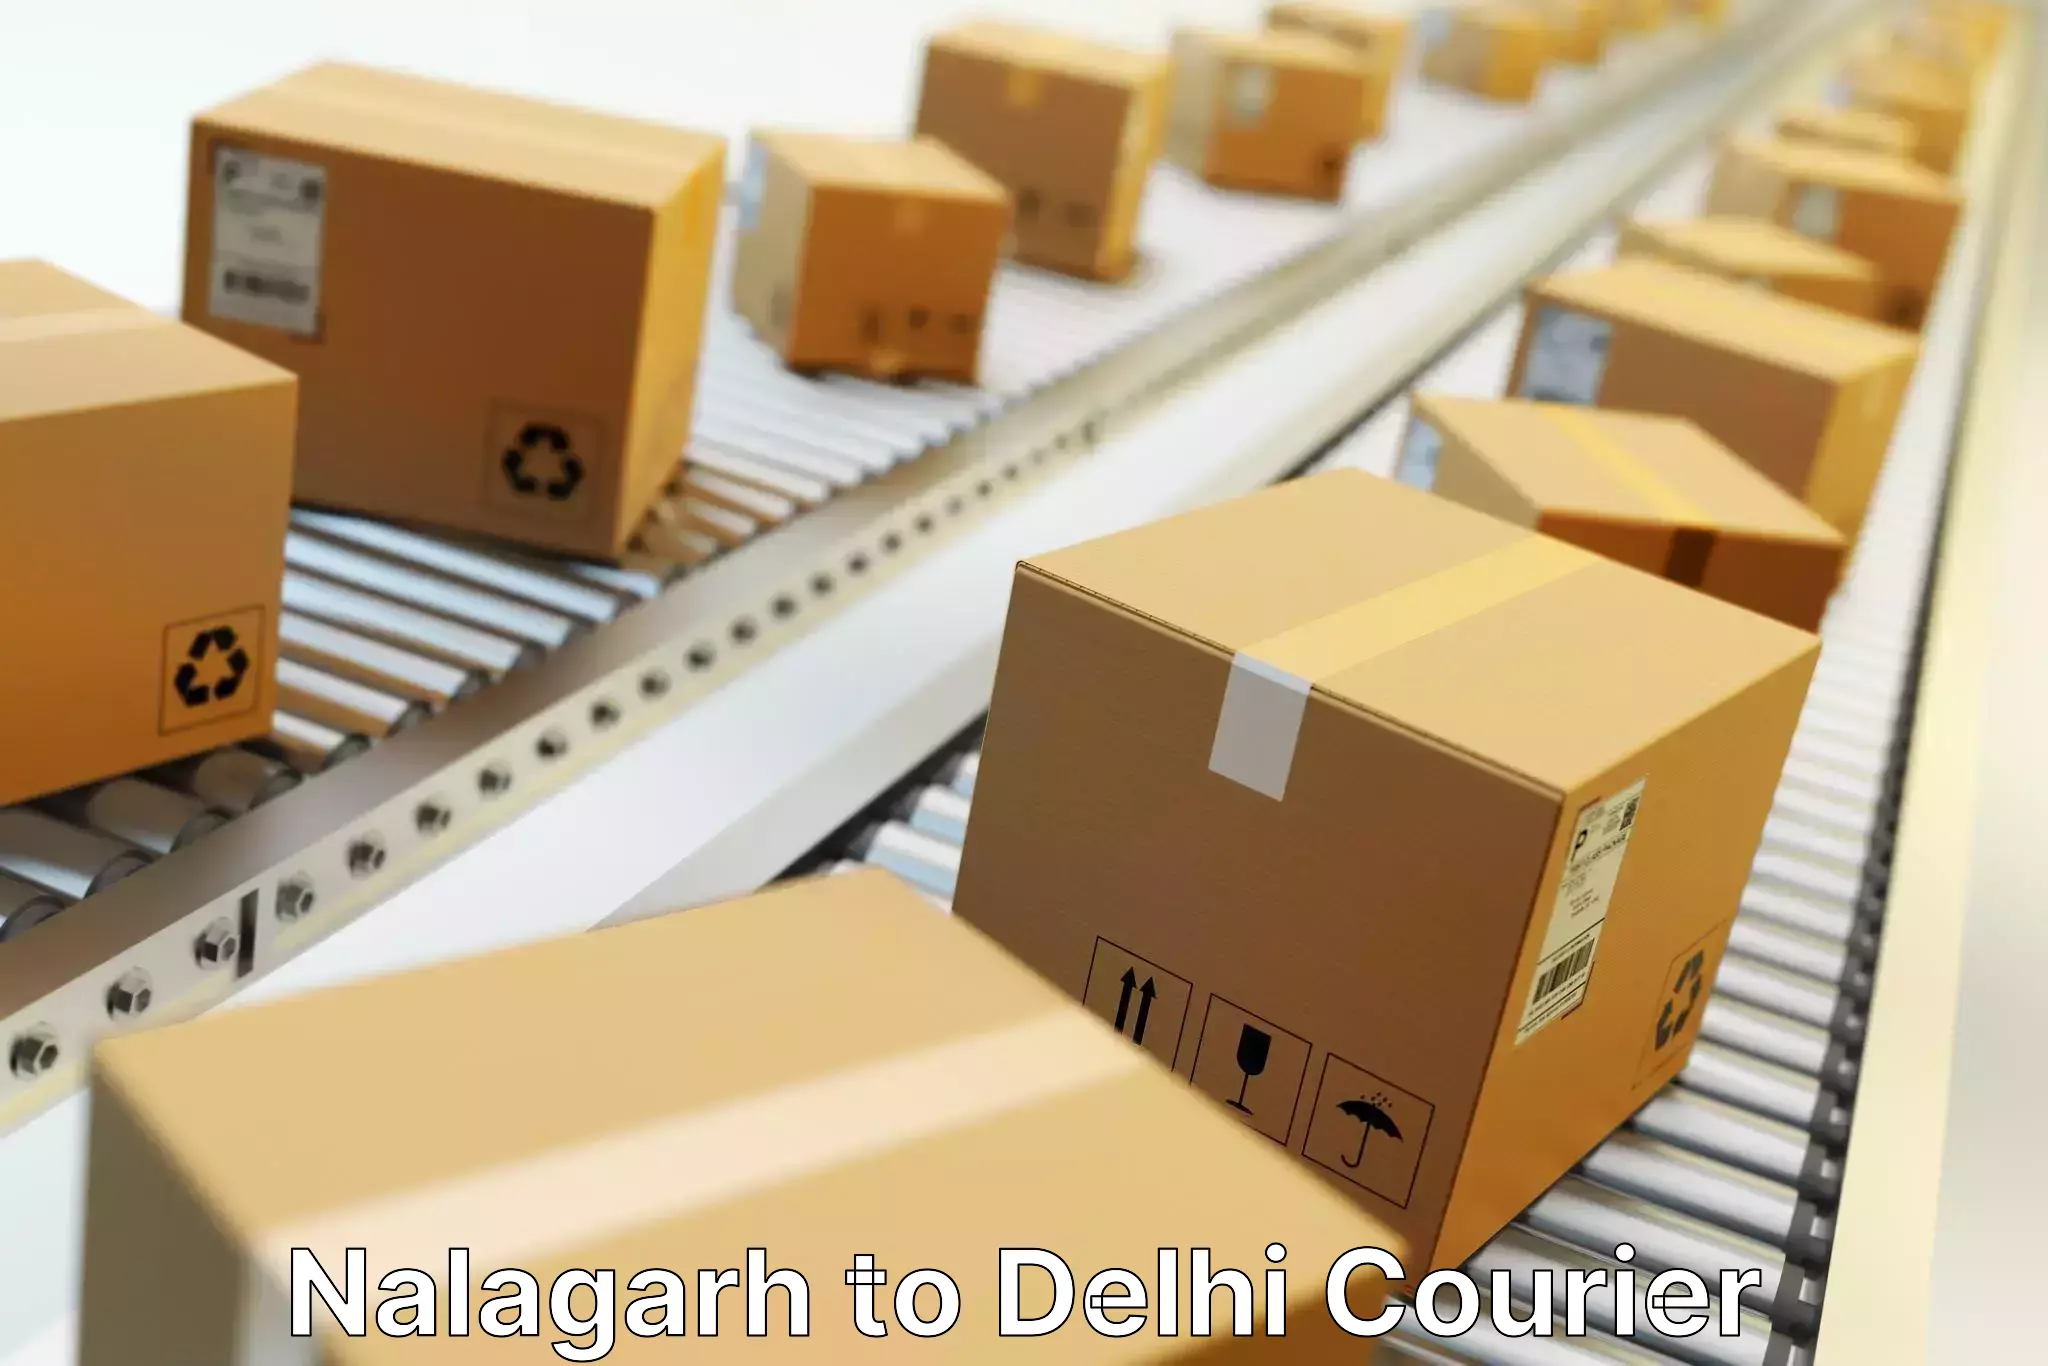 Digital courier platforms Nalagarh to Delhi